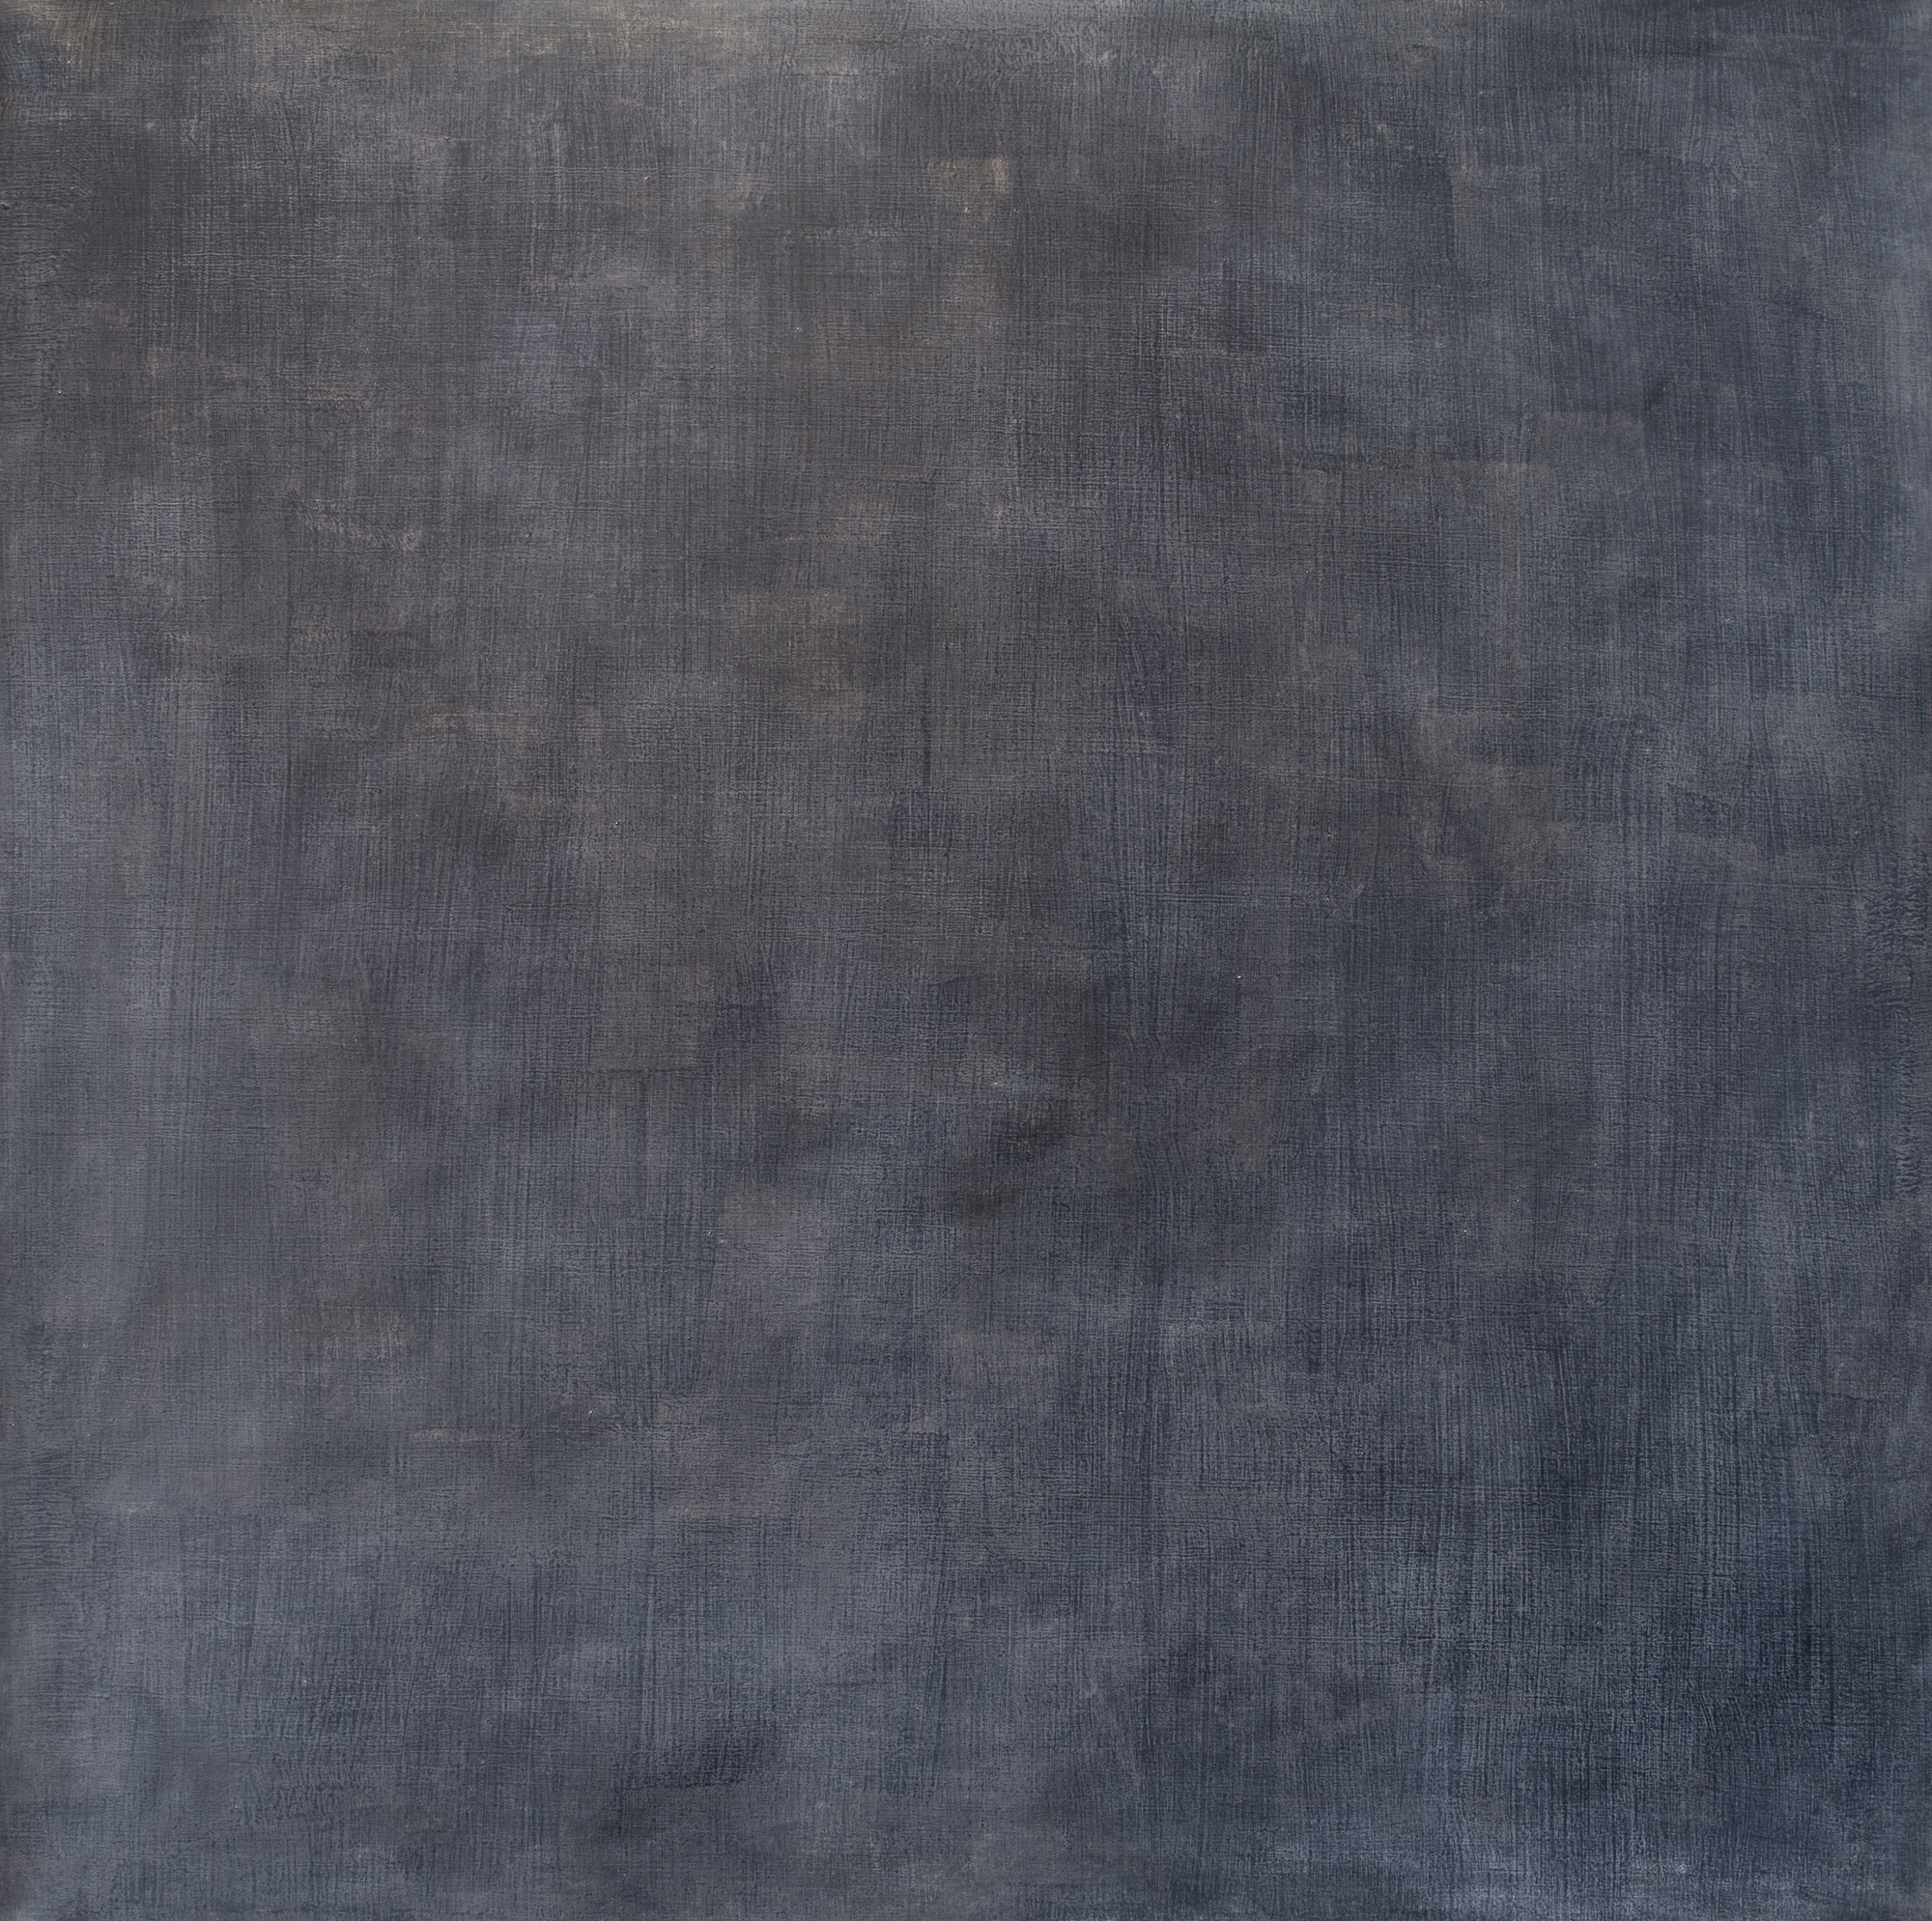    Yamiche,   2016, oil on linen, 46x46 